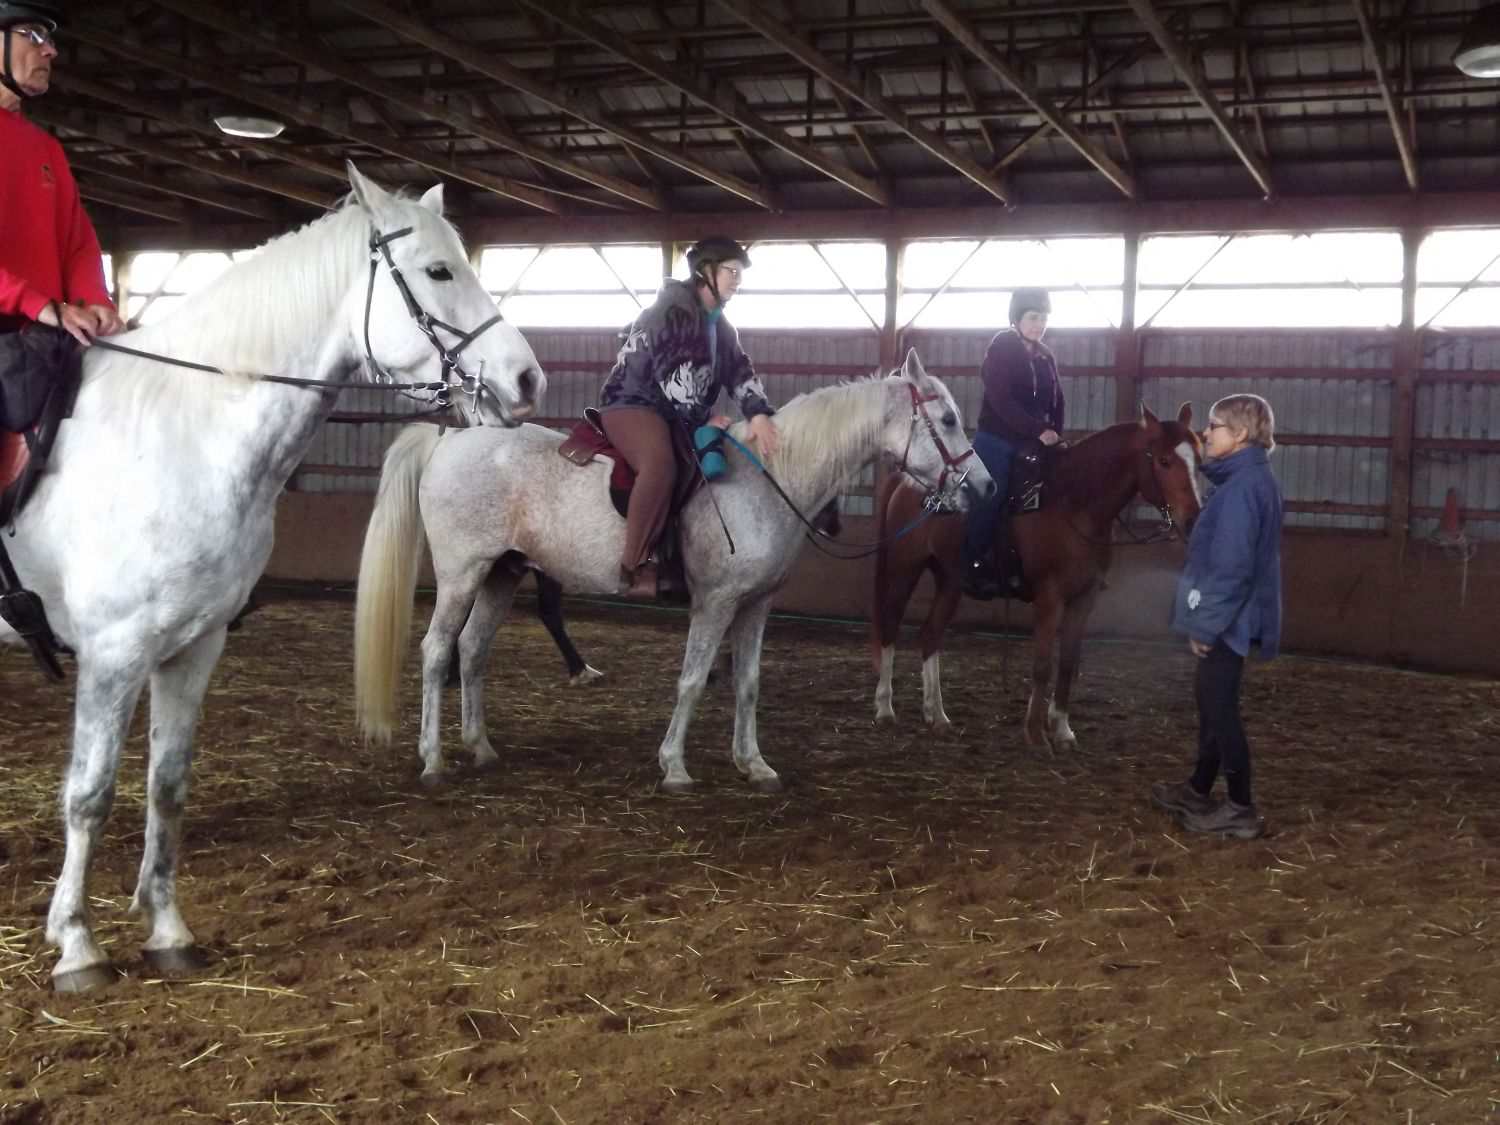 A horse riding lesson